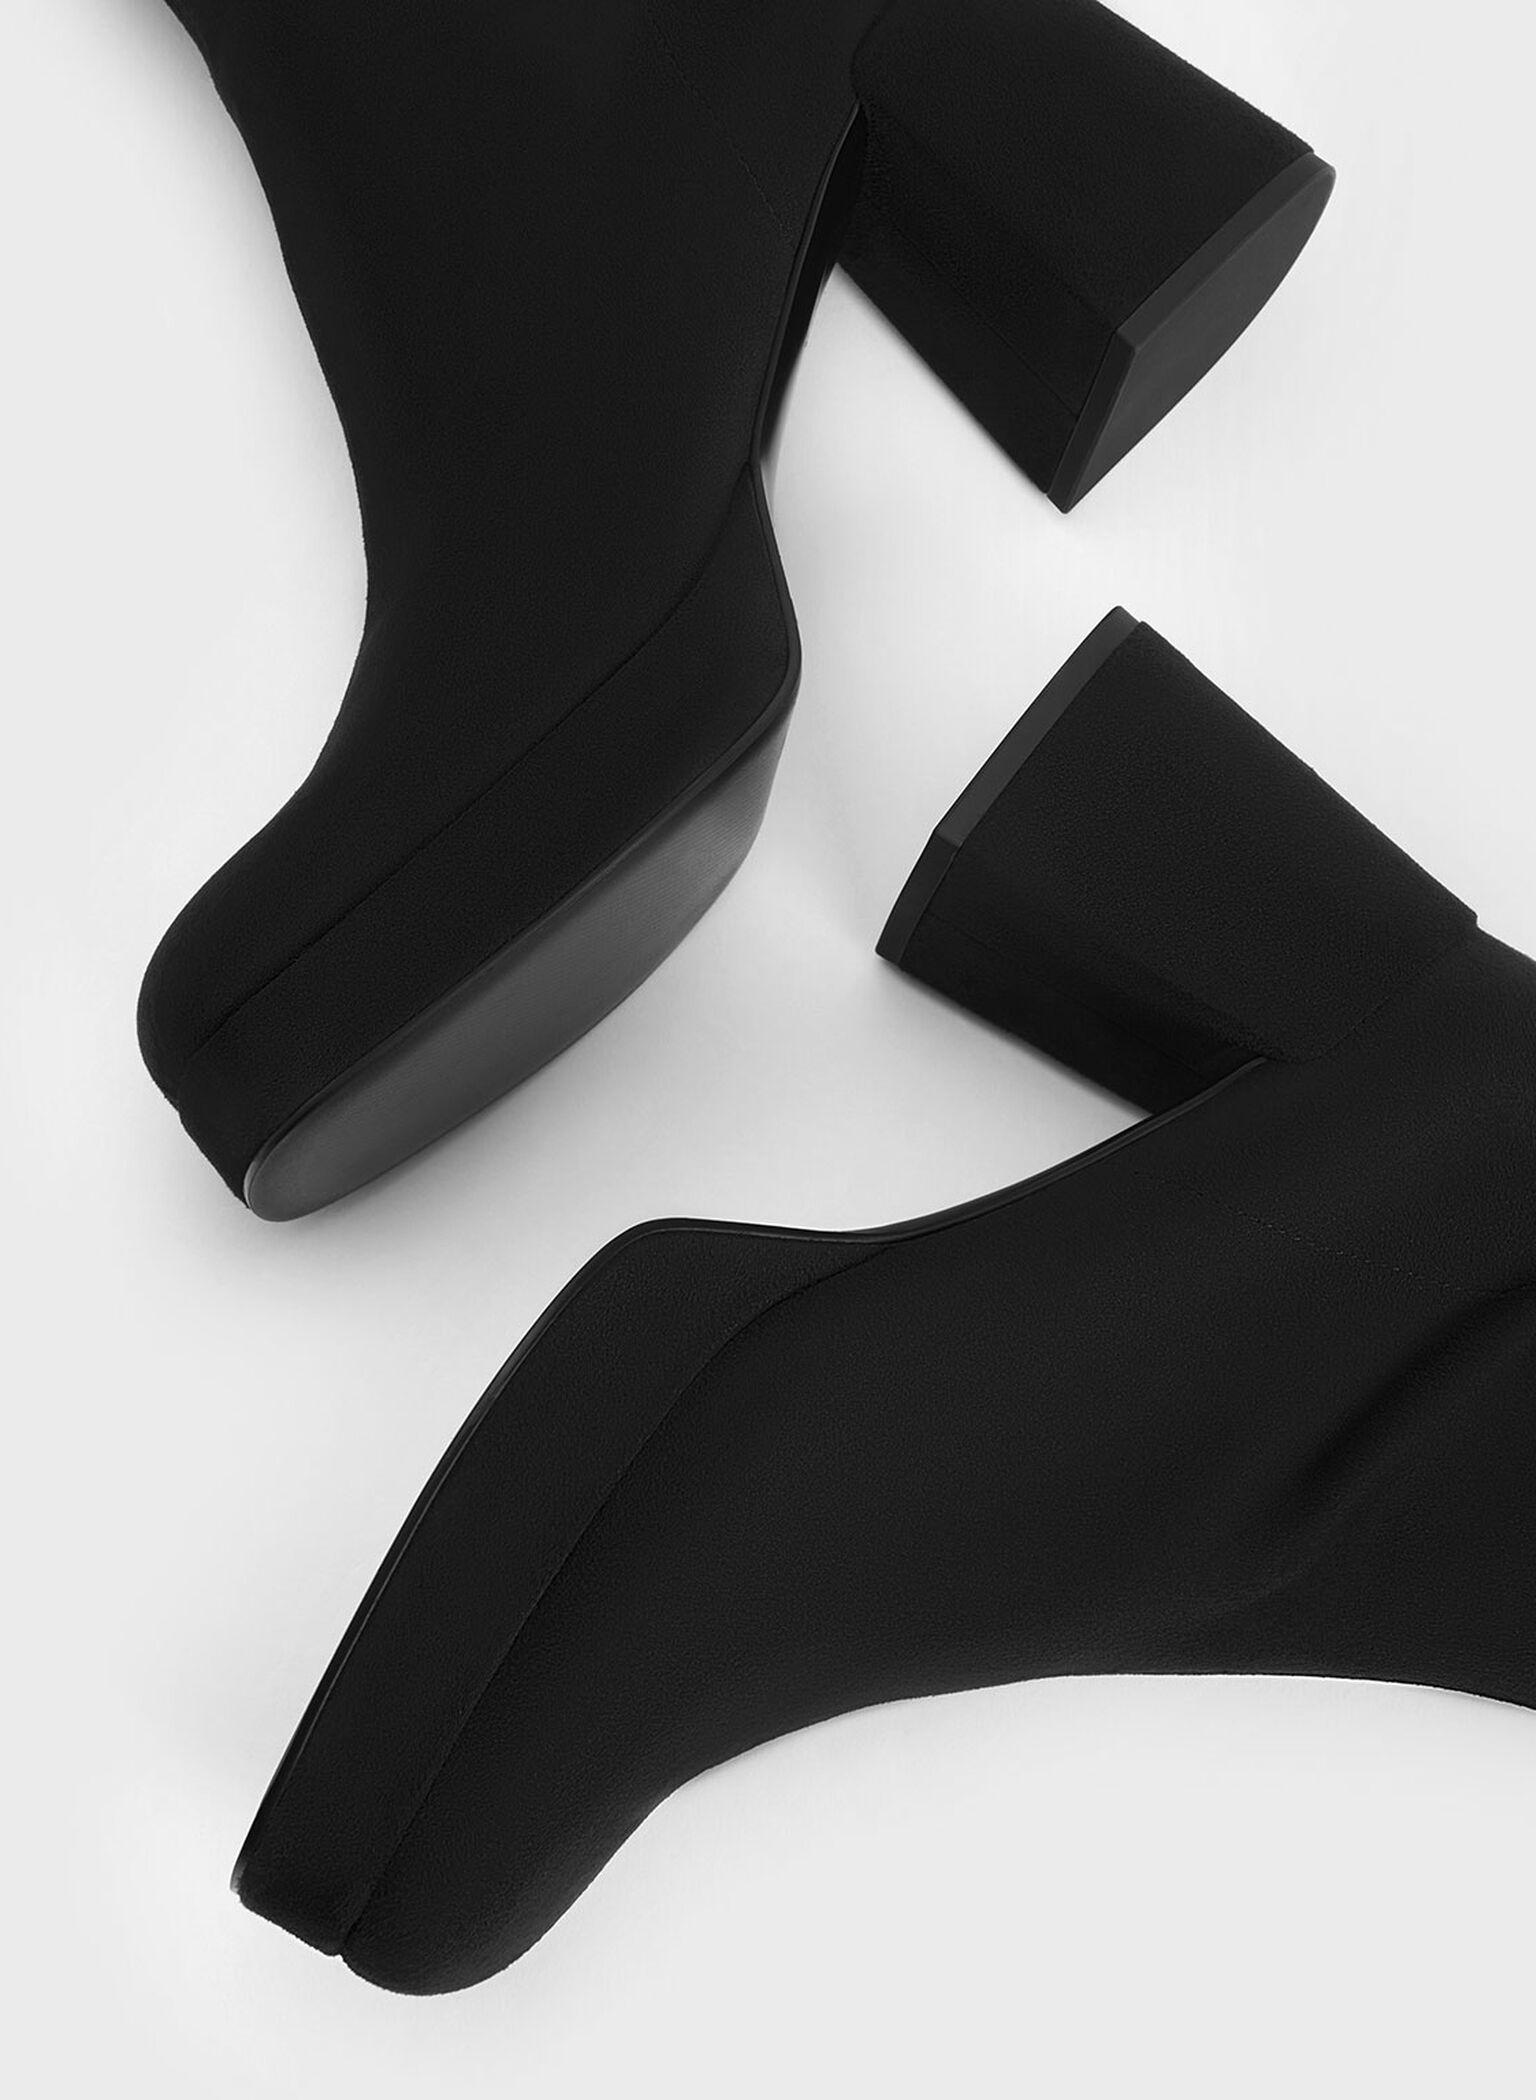 Evie Textured Platform Thigh-High Boots, Black Textured, hi-res